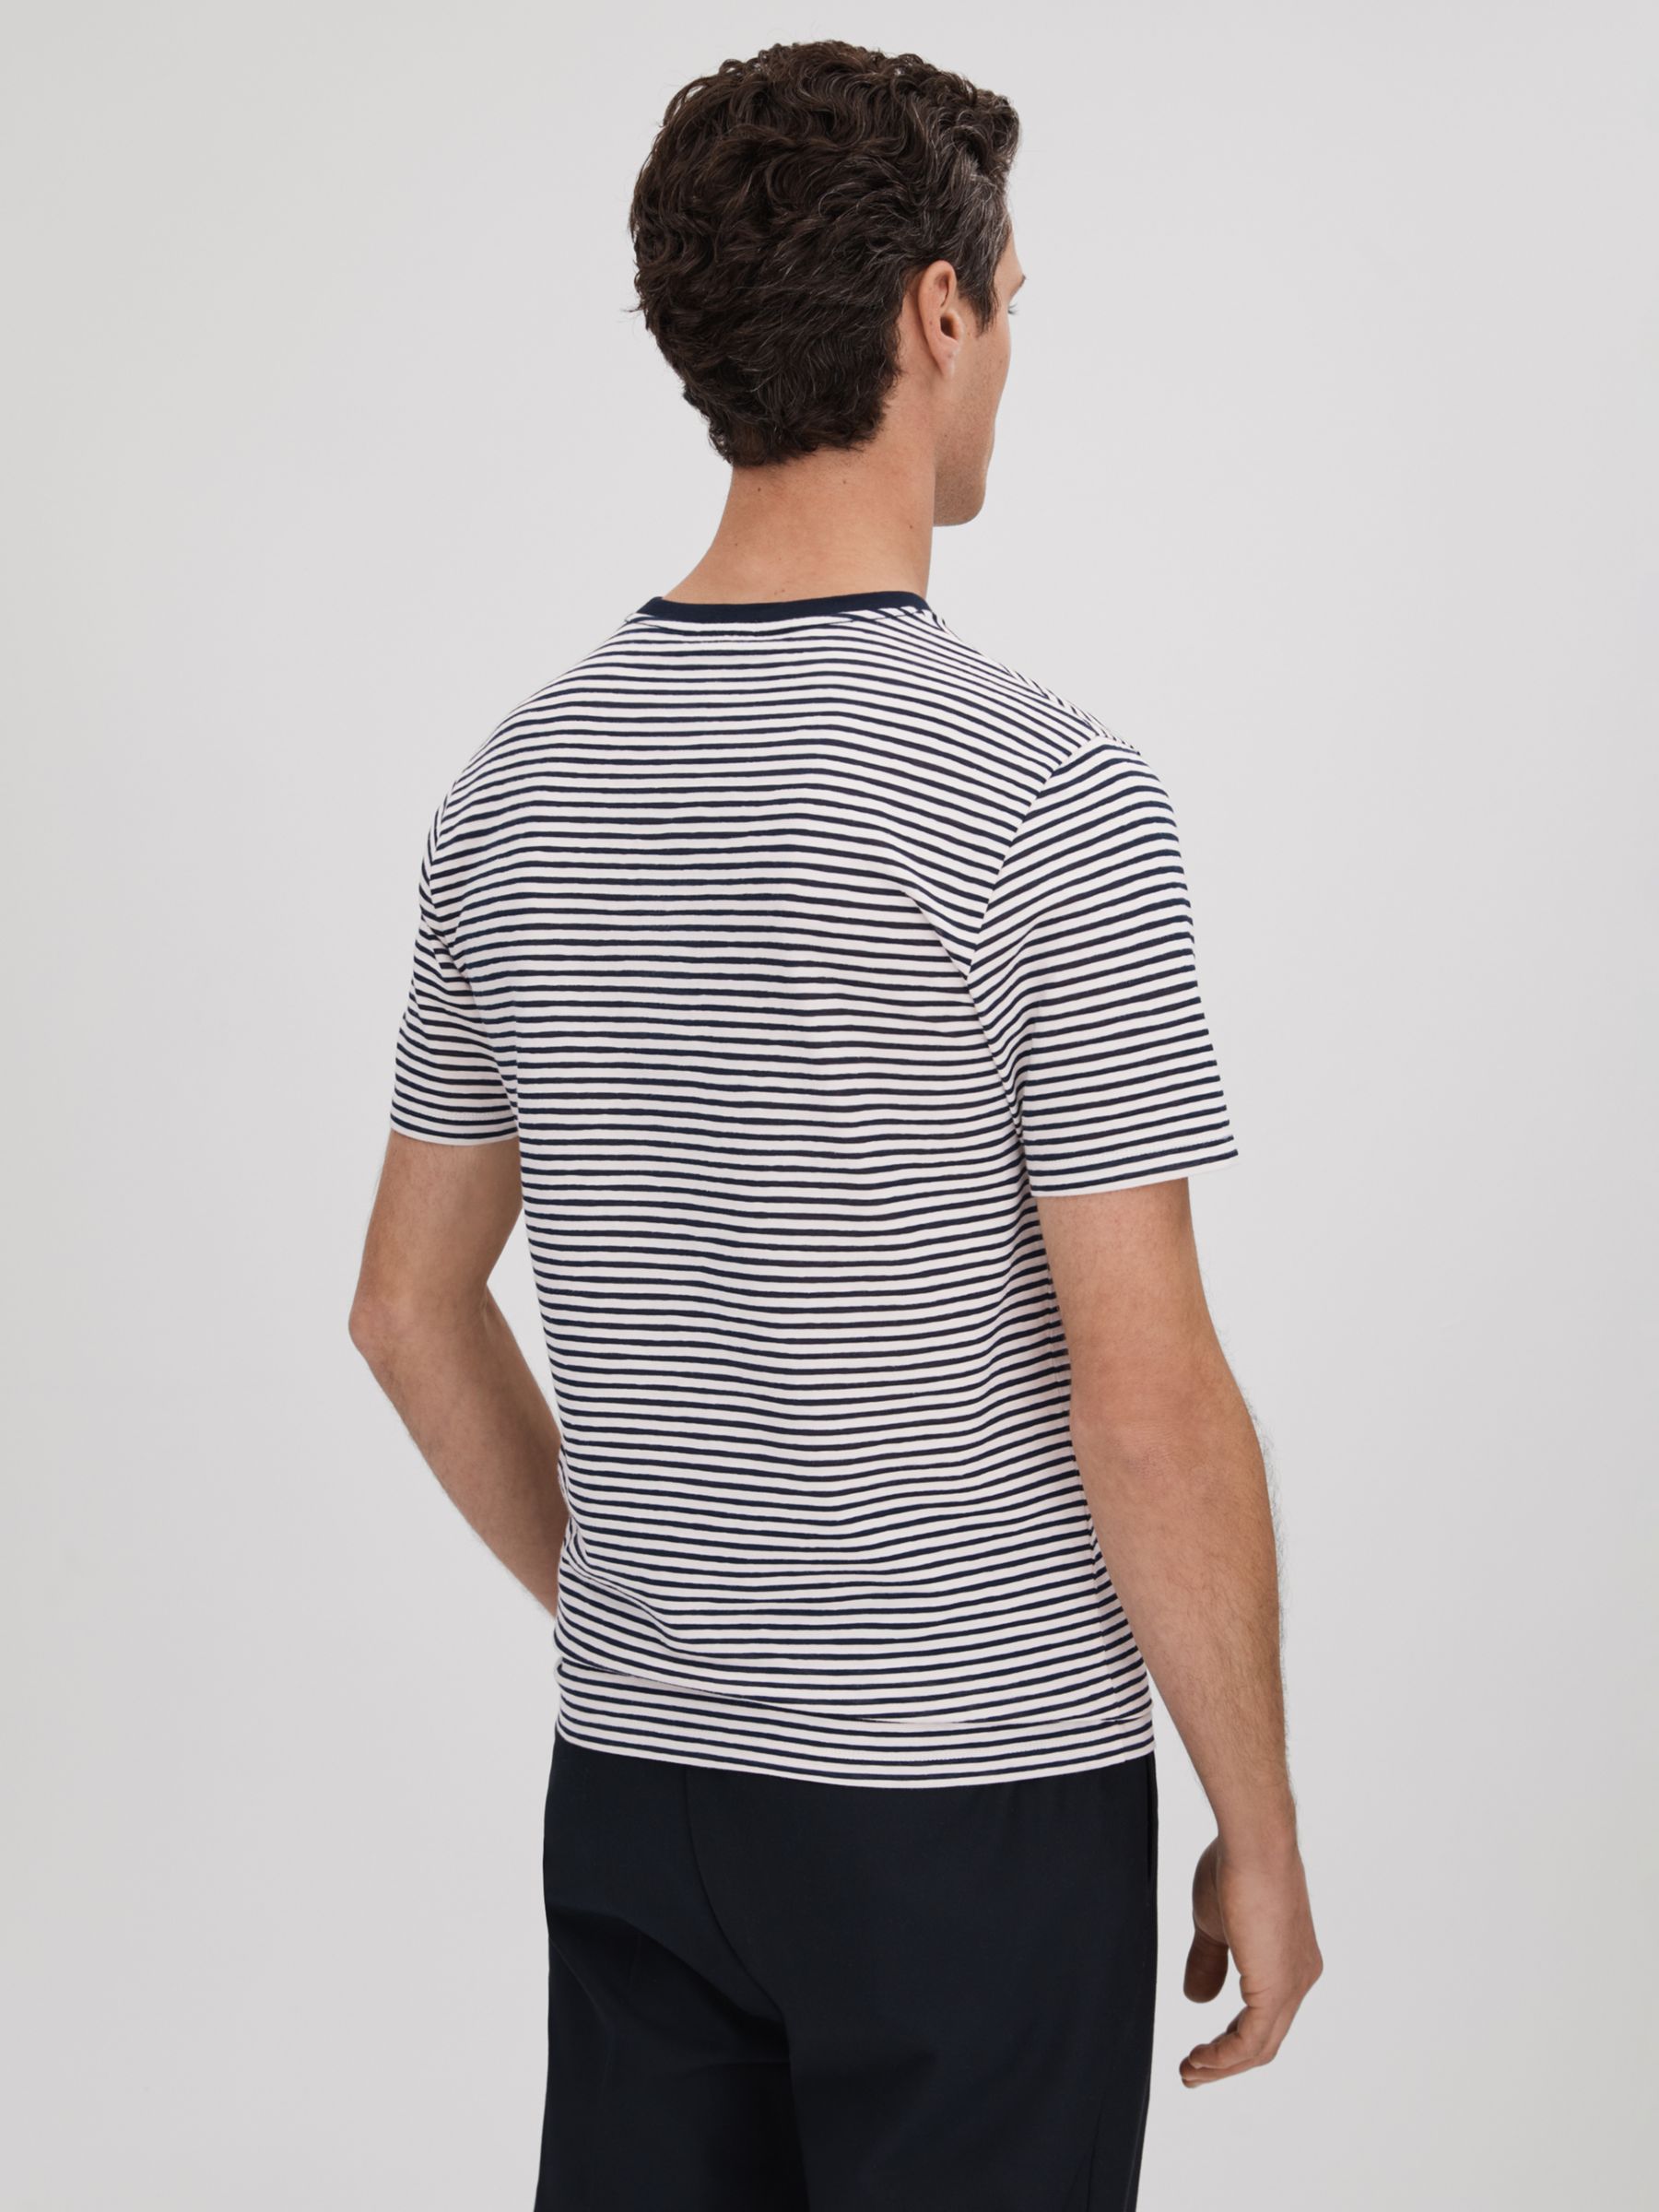 Reiss Keats Short Sleeve Stripe T-Shirt, Navy/White at John Lewis ...